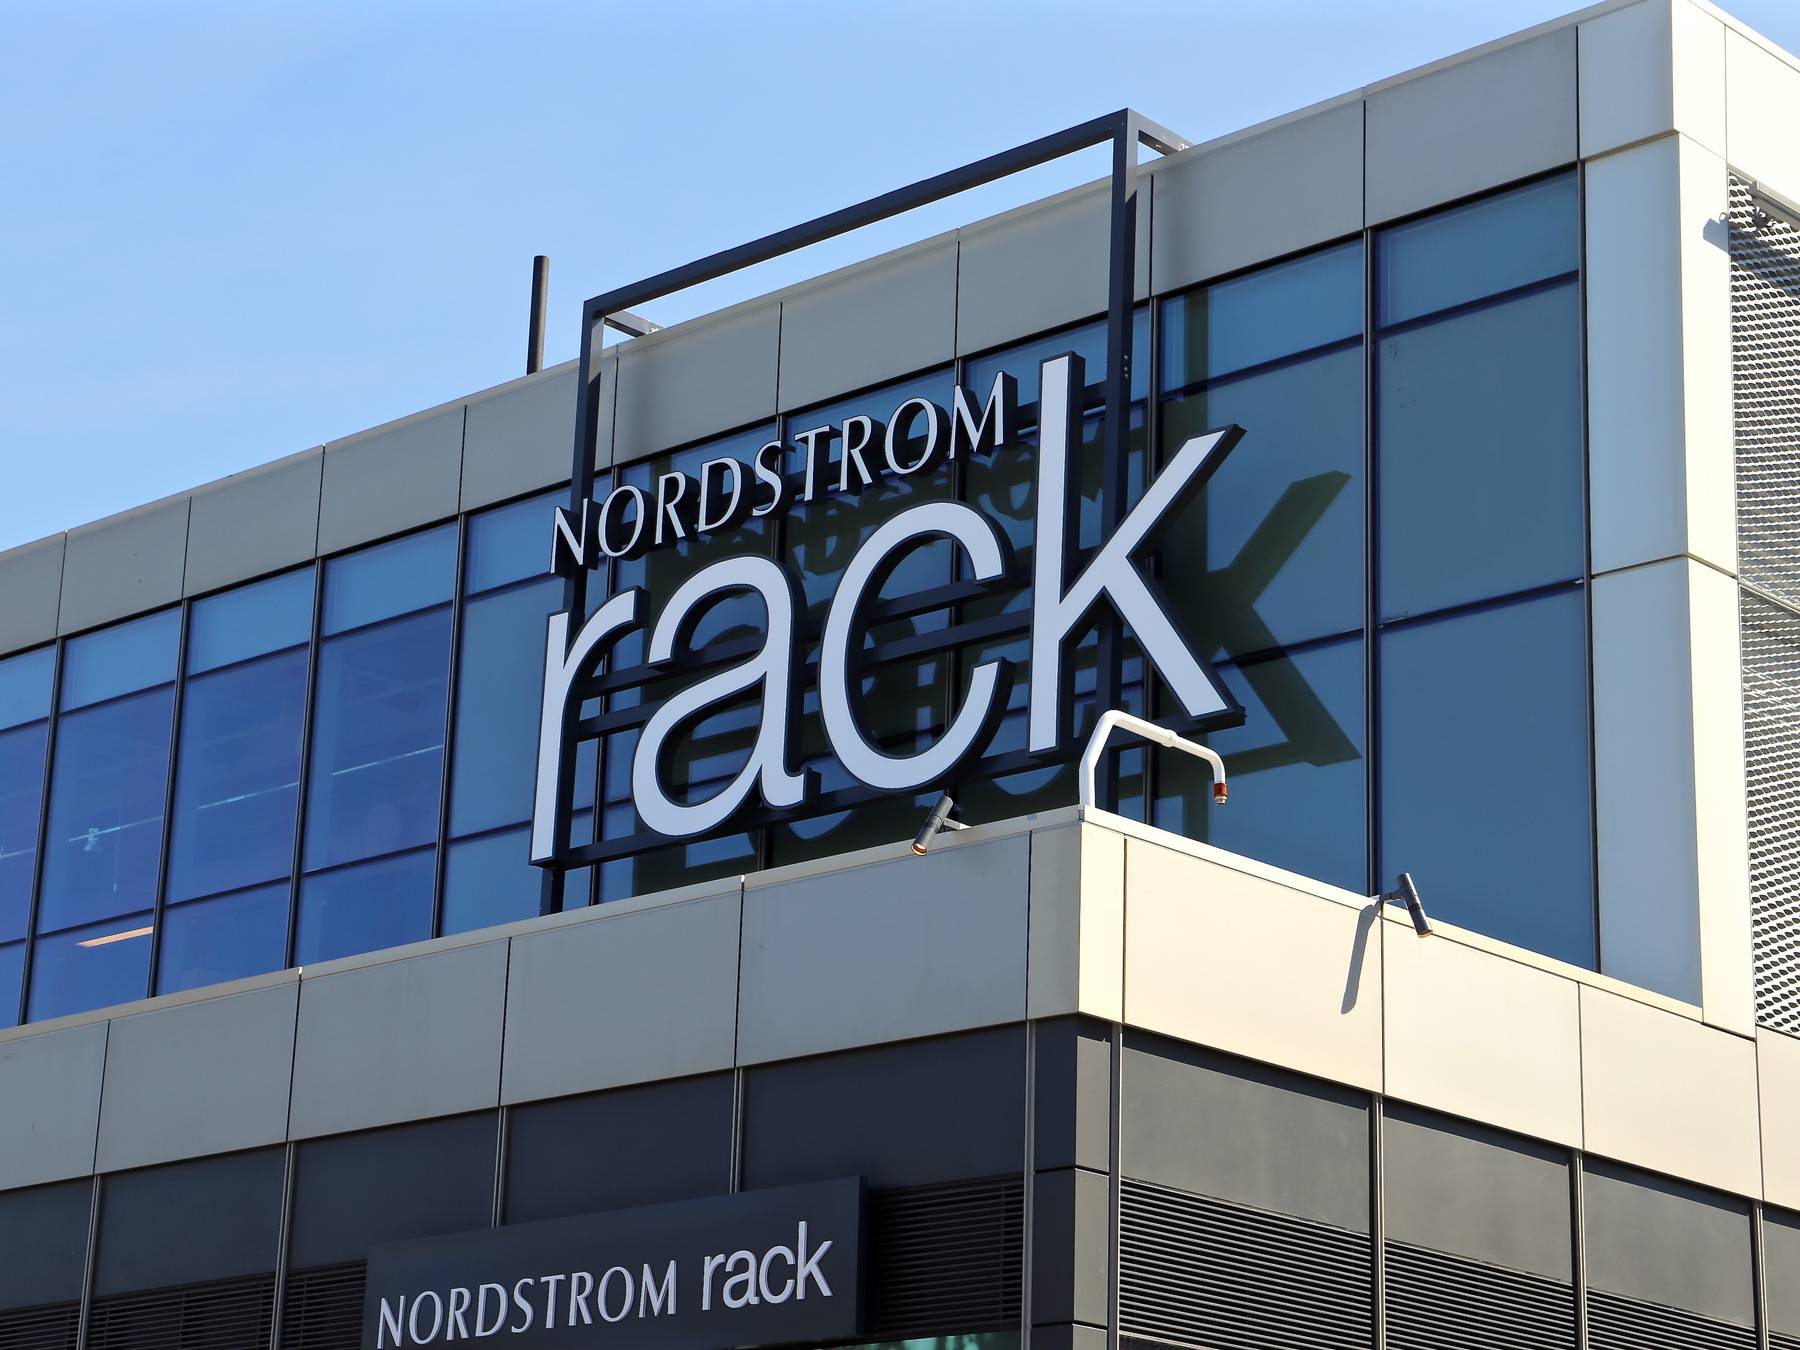 Nordstrom Cuts 2019 Sales Forecast After Q1 Revenue Miss